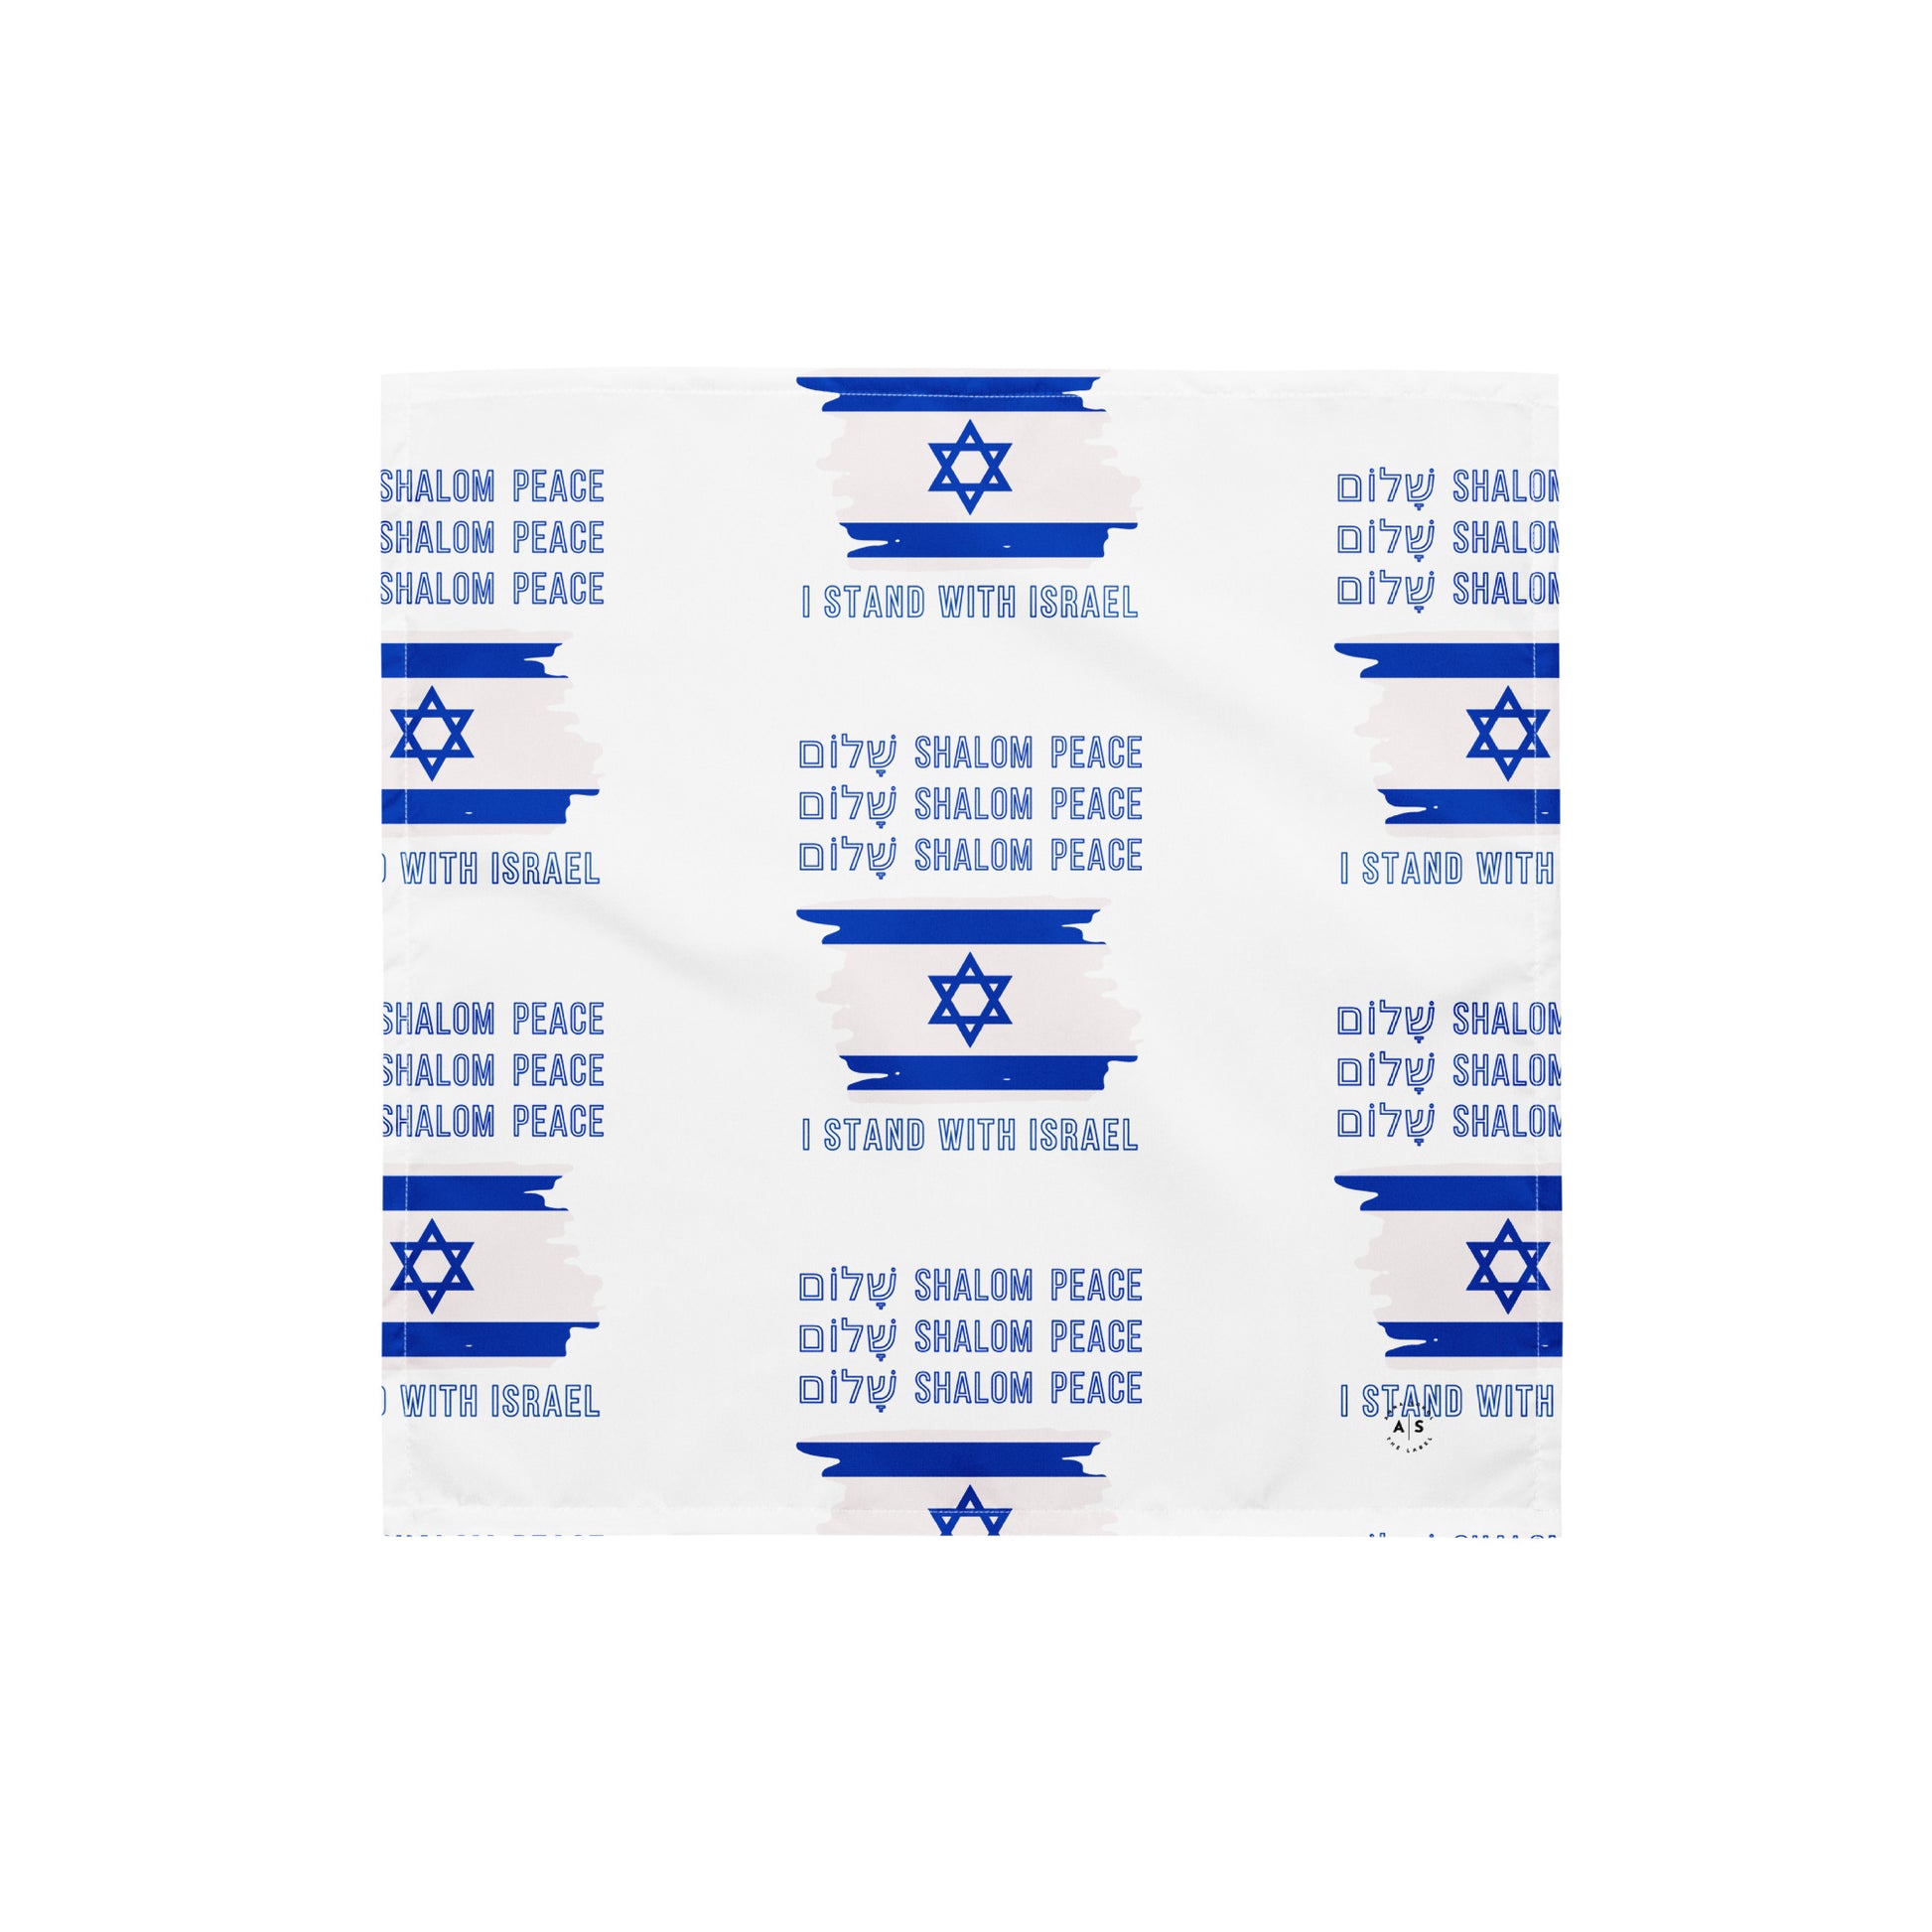 Shalon Israel